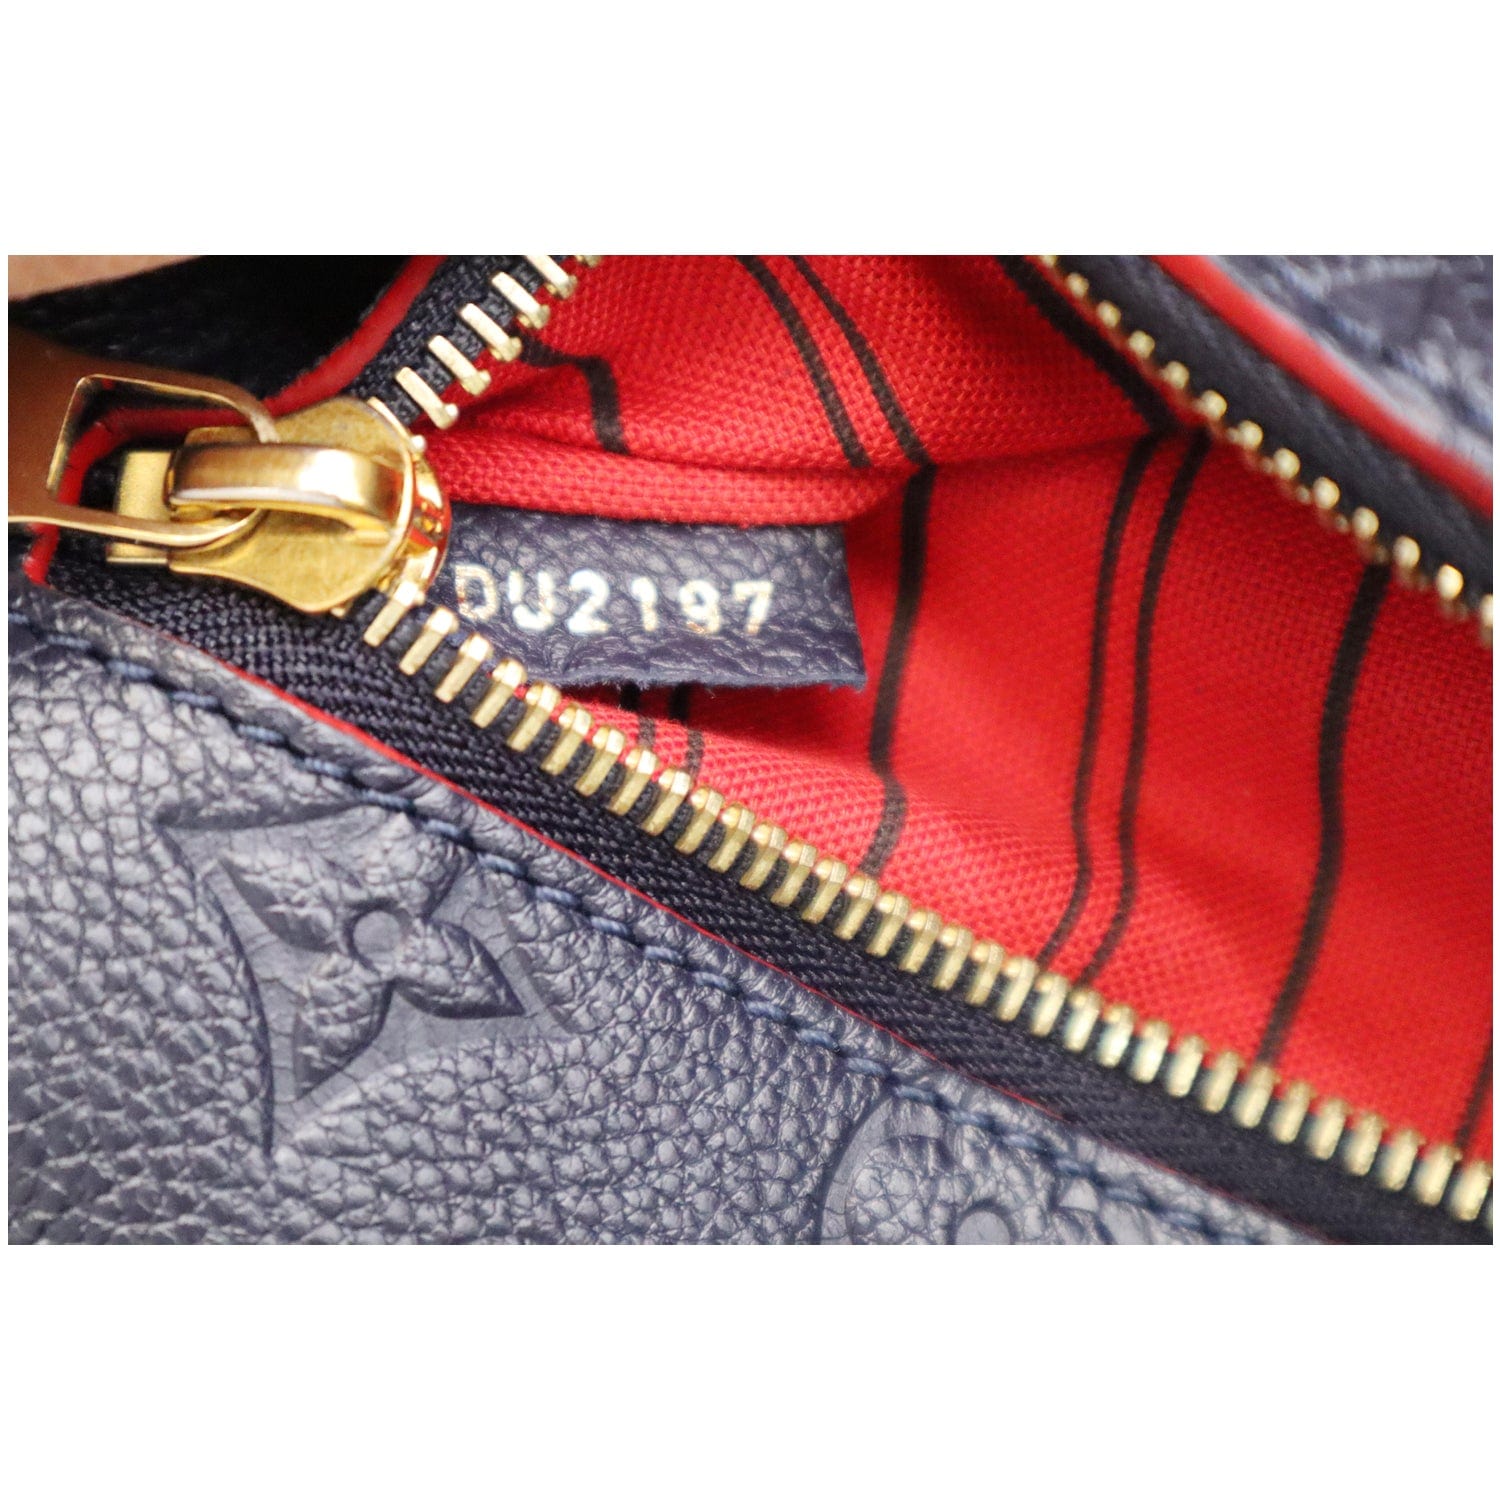 Louis Vuitton lined zip pochette marine rouge navy red crossbody